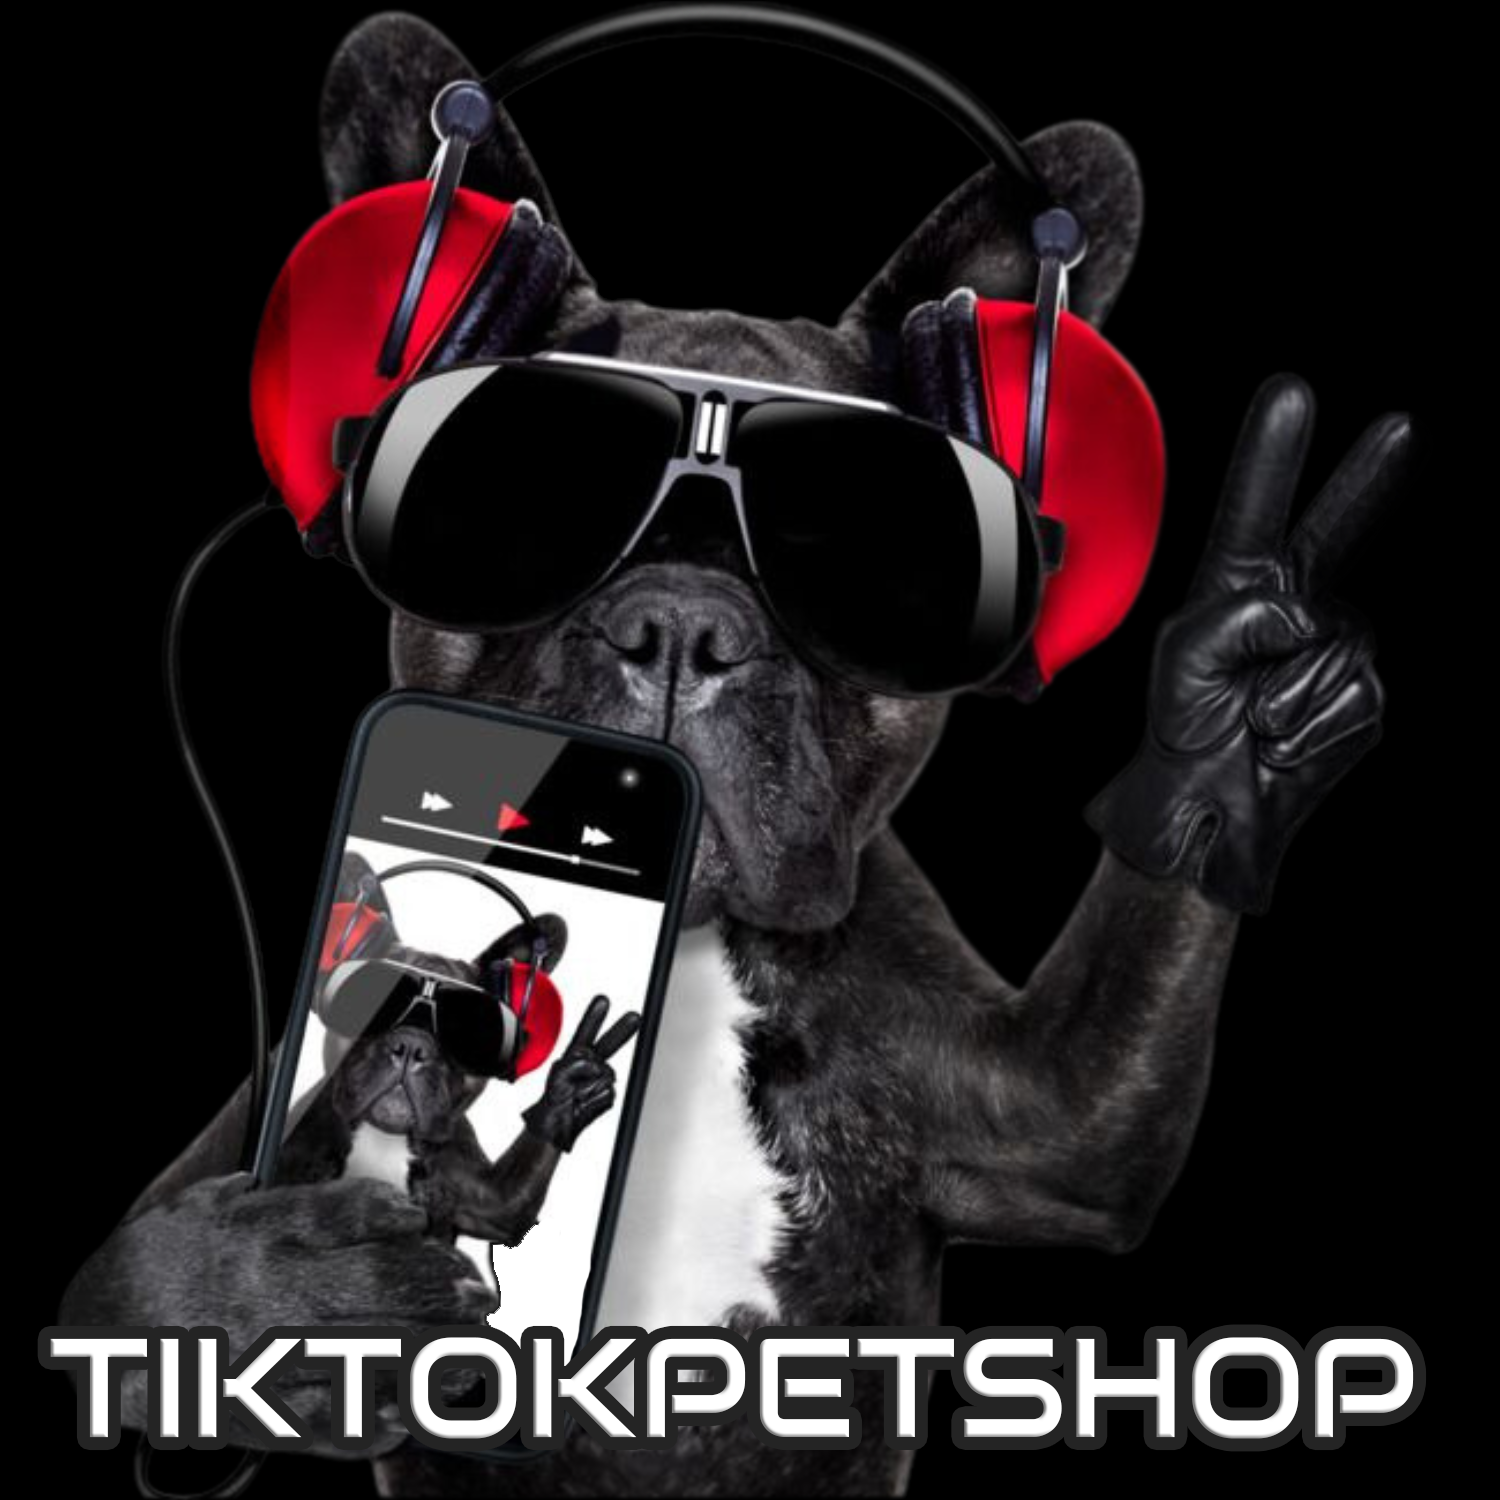 Tiktokpetshop.com Viral and trendy Pet products